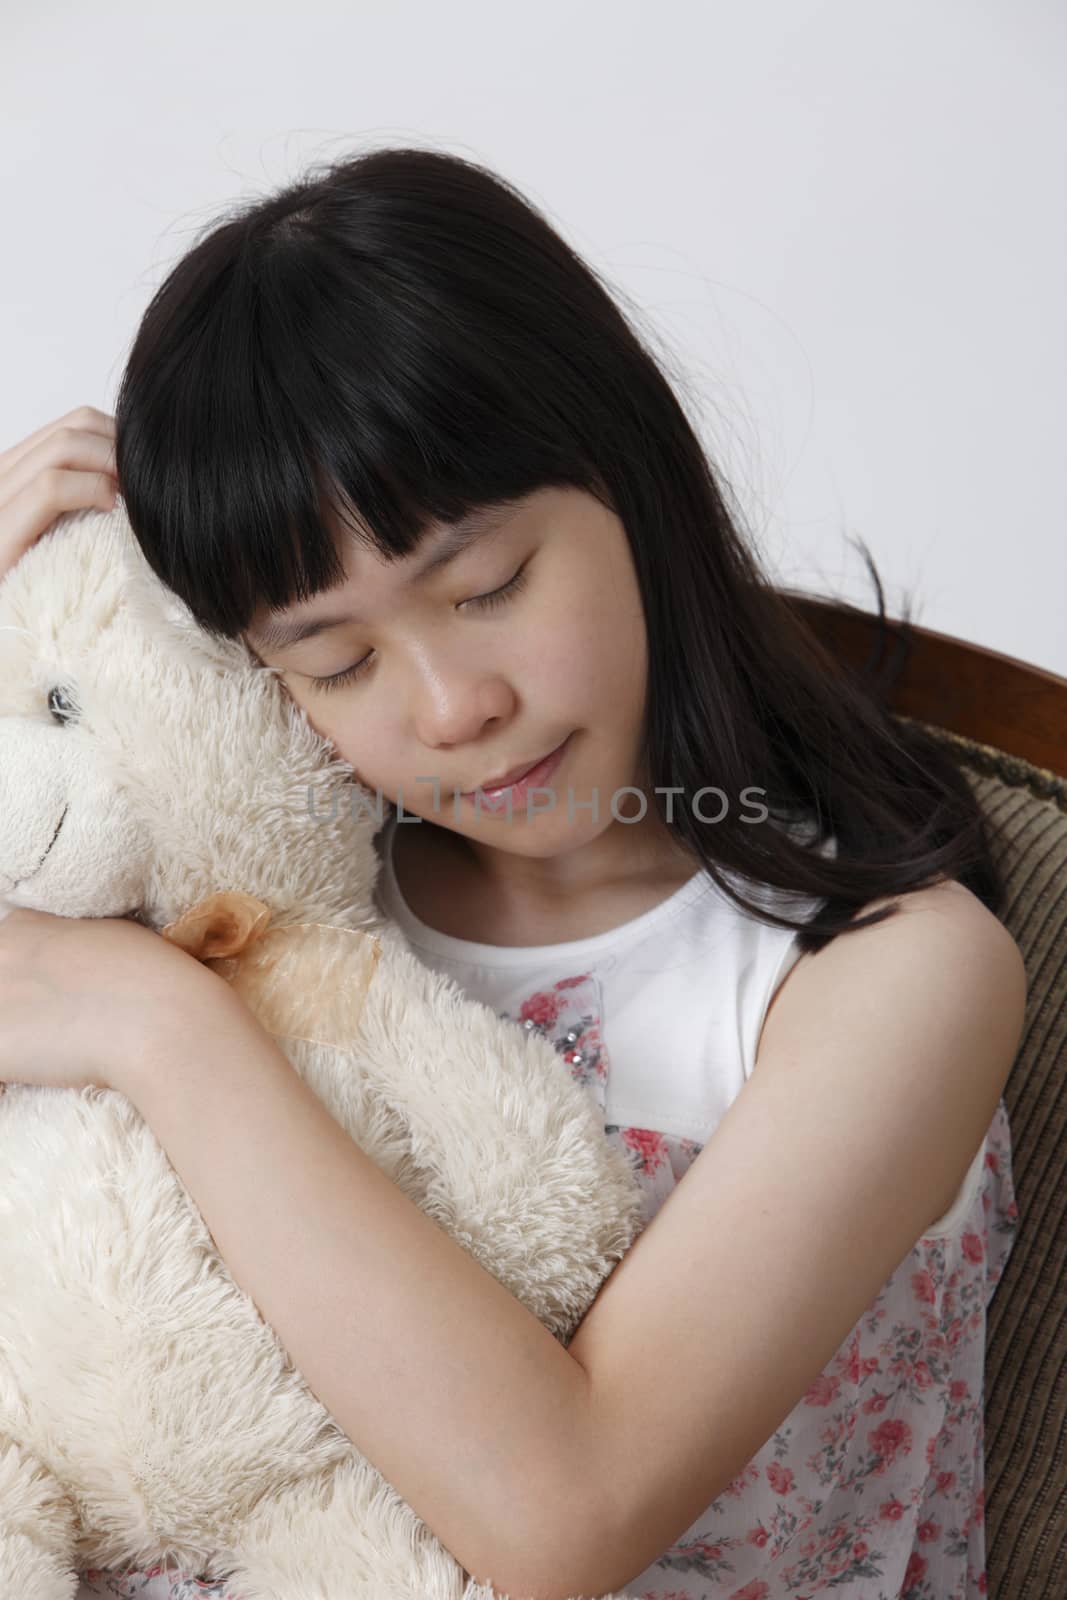 chinese girl sleeping with teddy bear